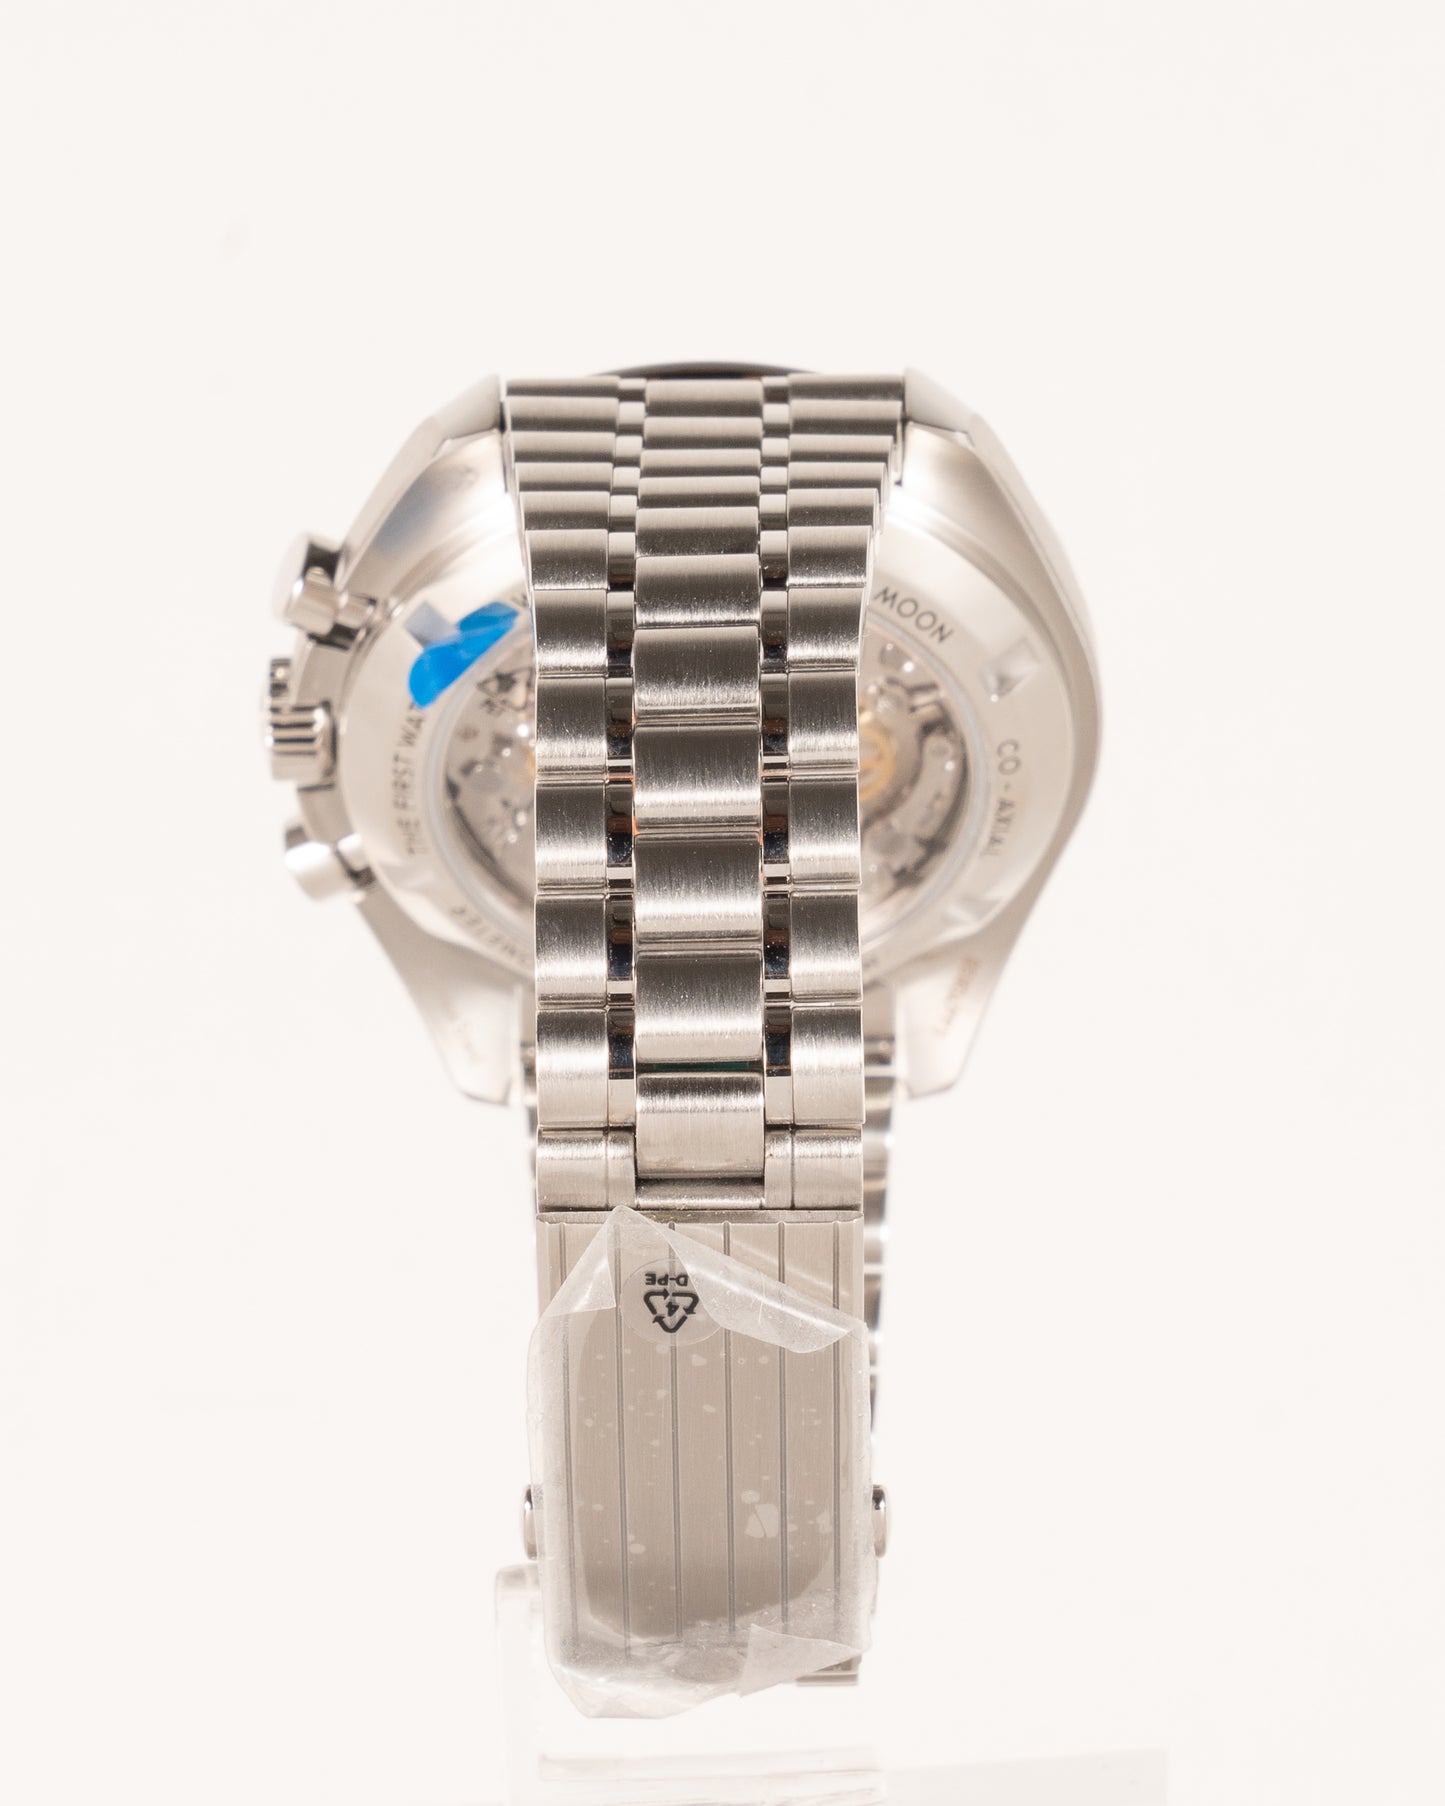 UNWORN Omega Speedmaster Professional Moonwatch 310.30425004001 White Dial 2024 42mm